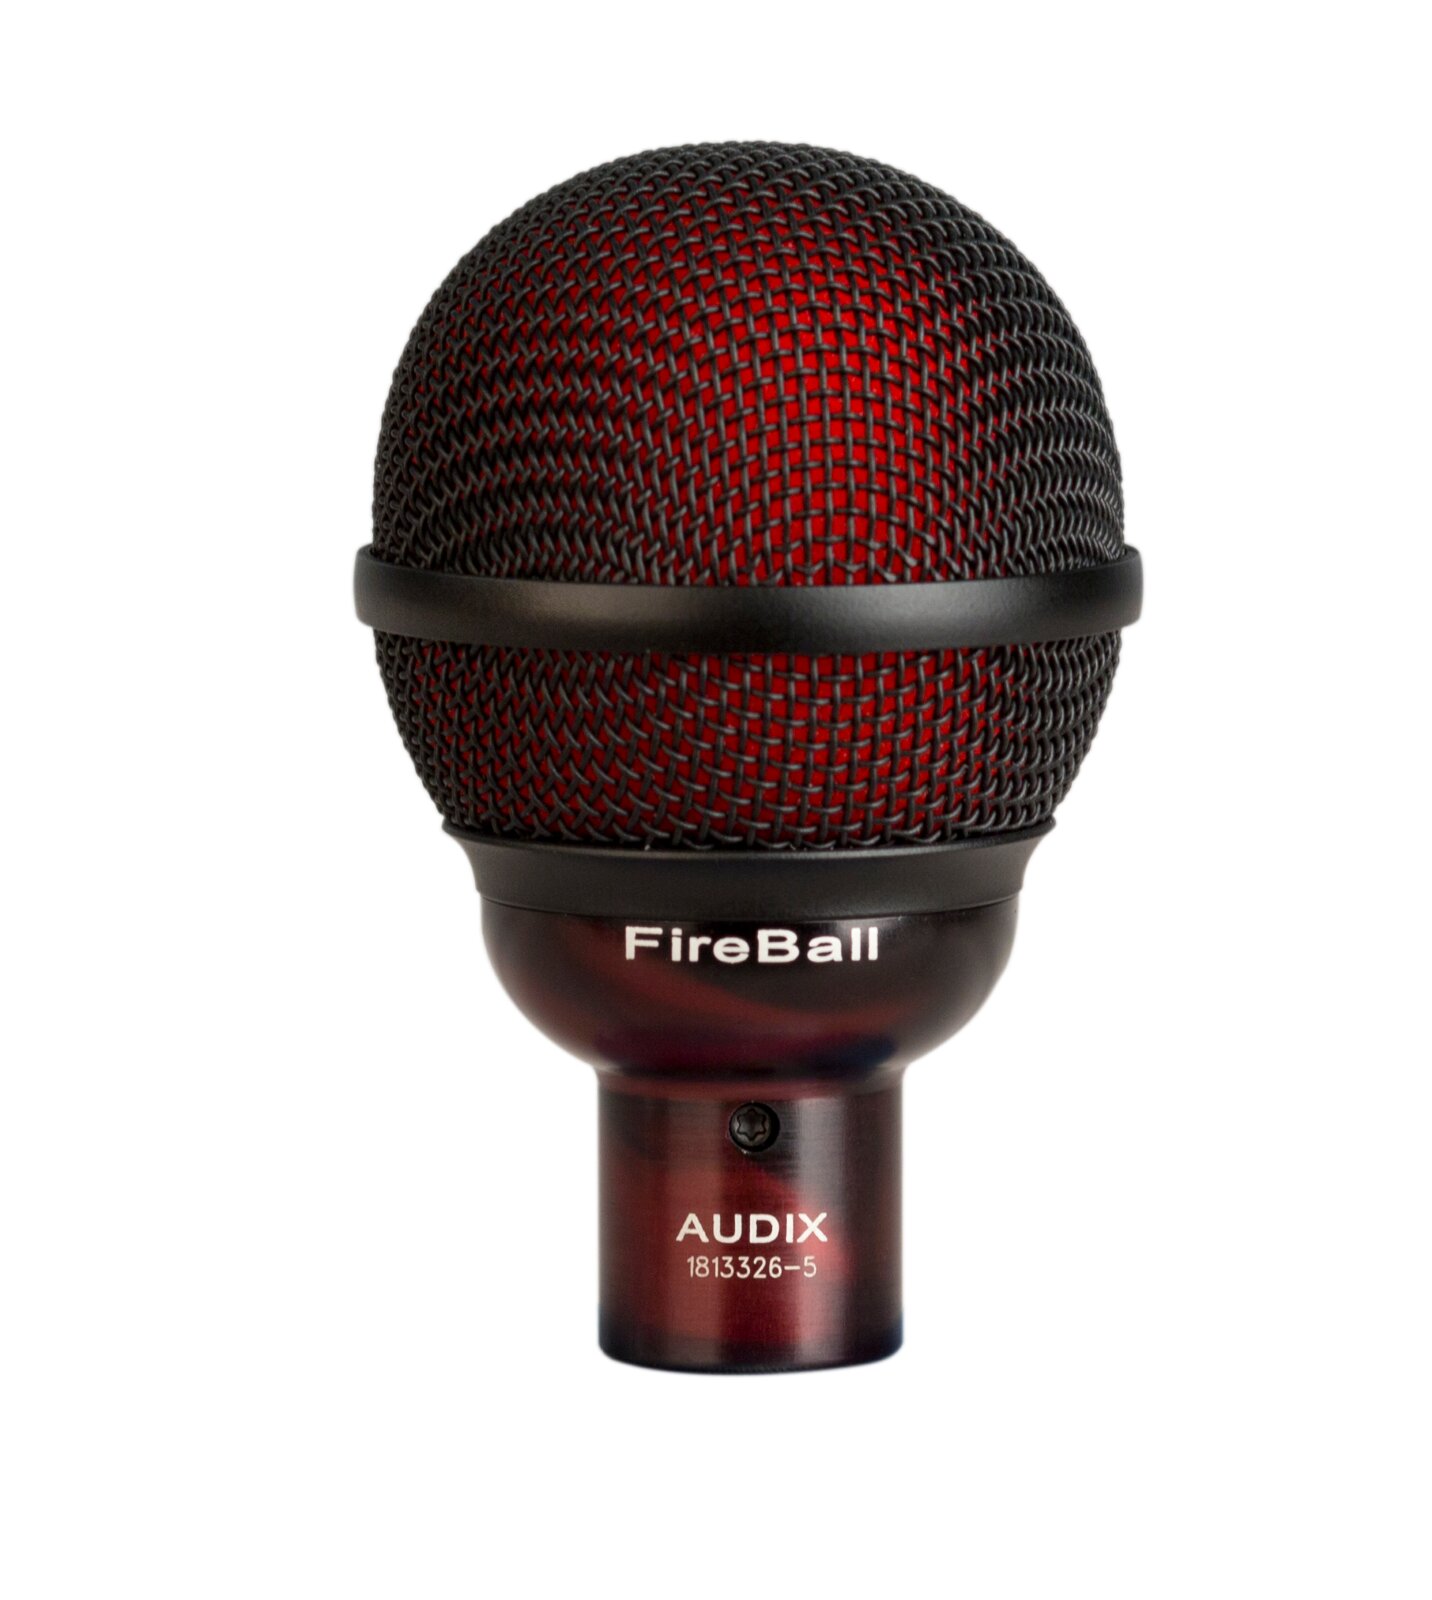 Audix FireBall Dynamique / Harmonica : photo 1